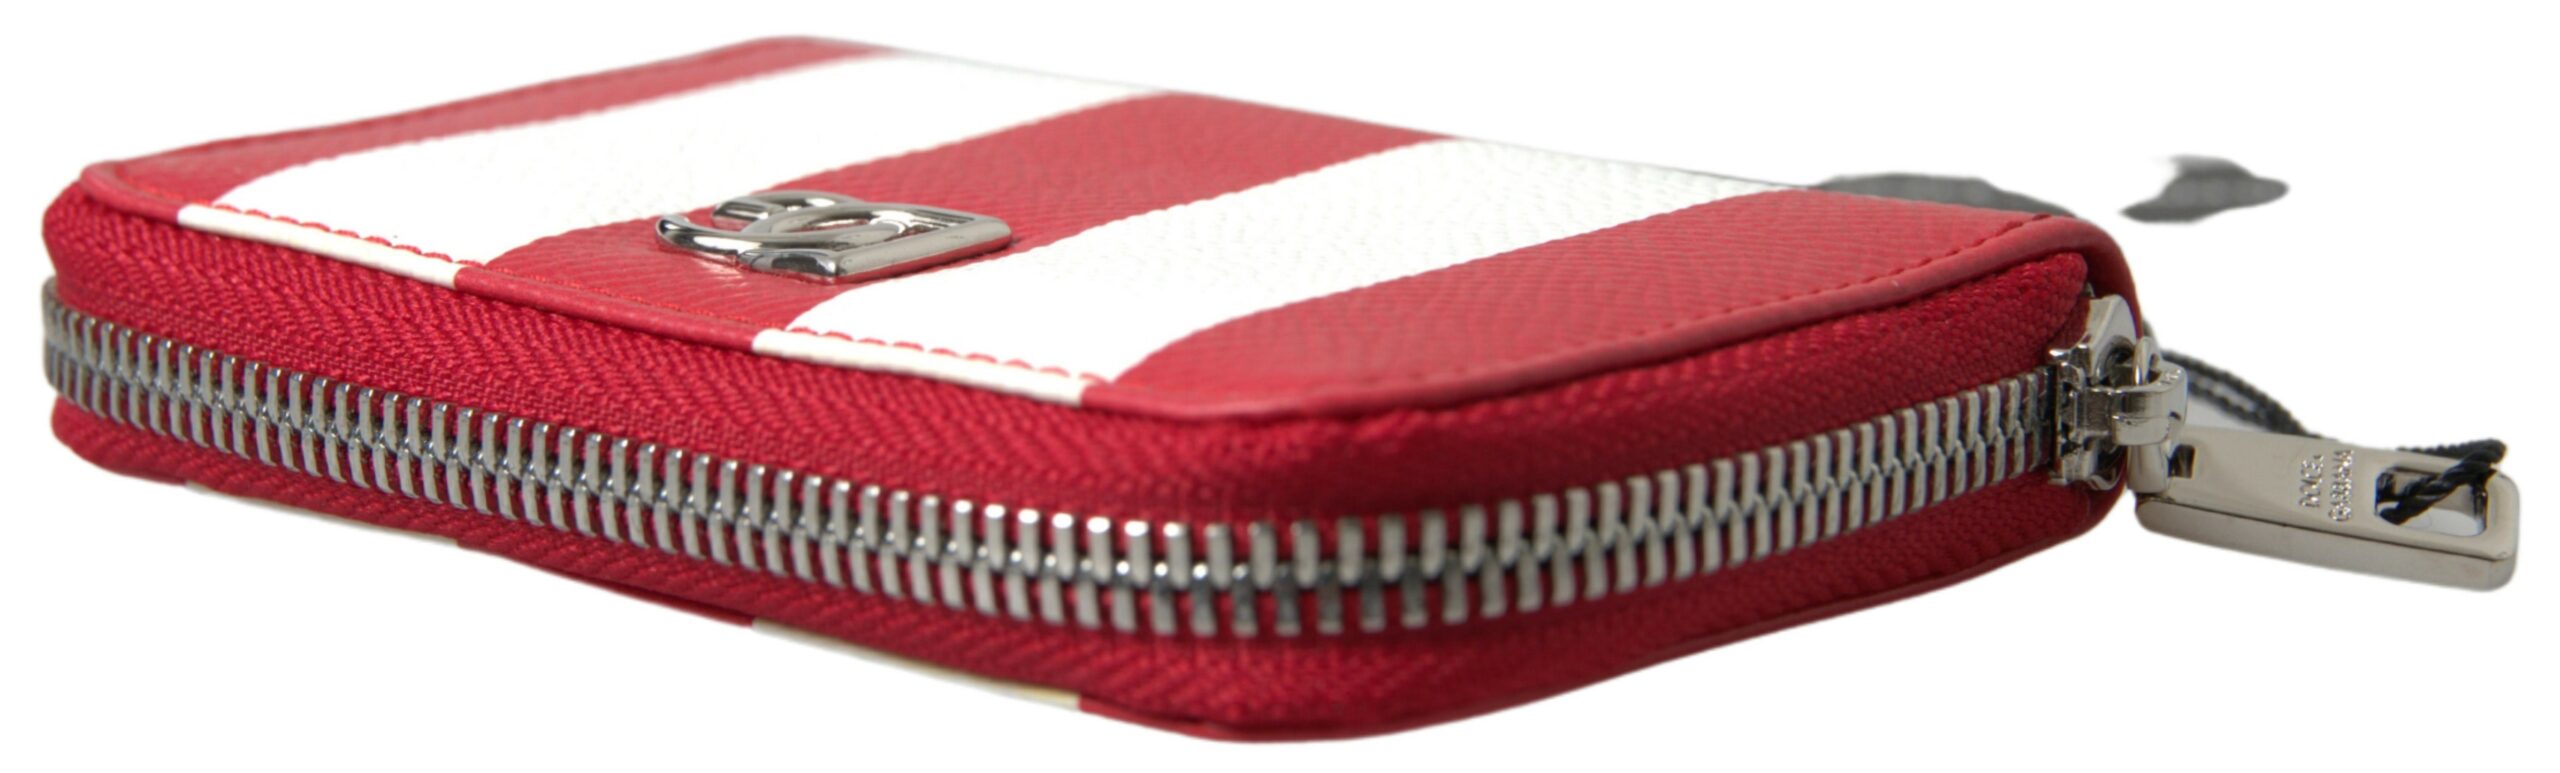 Dolce & Gabbana Elegant Continental Zip Wallet - Red & White Leather